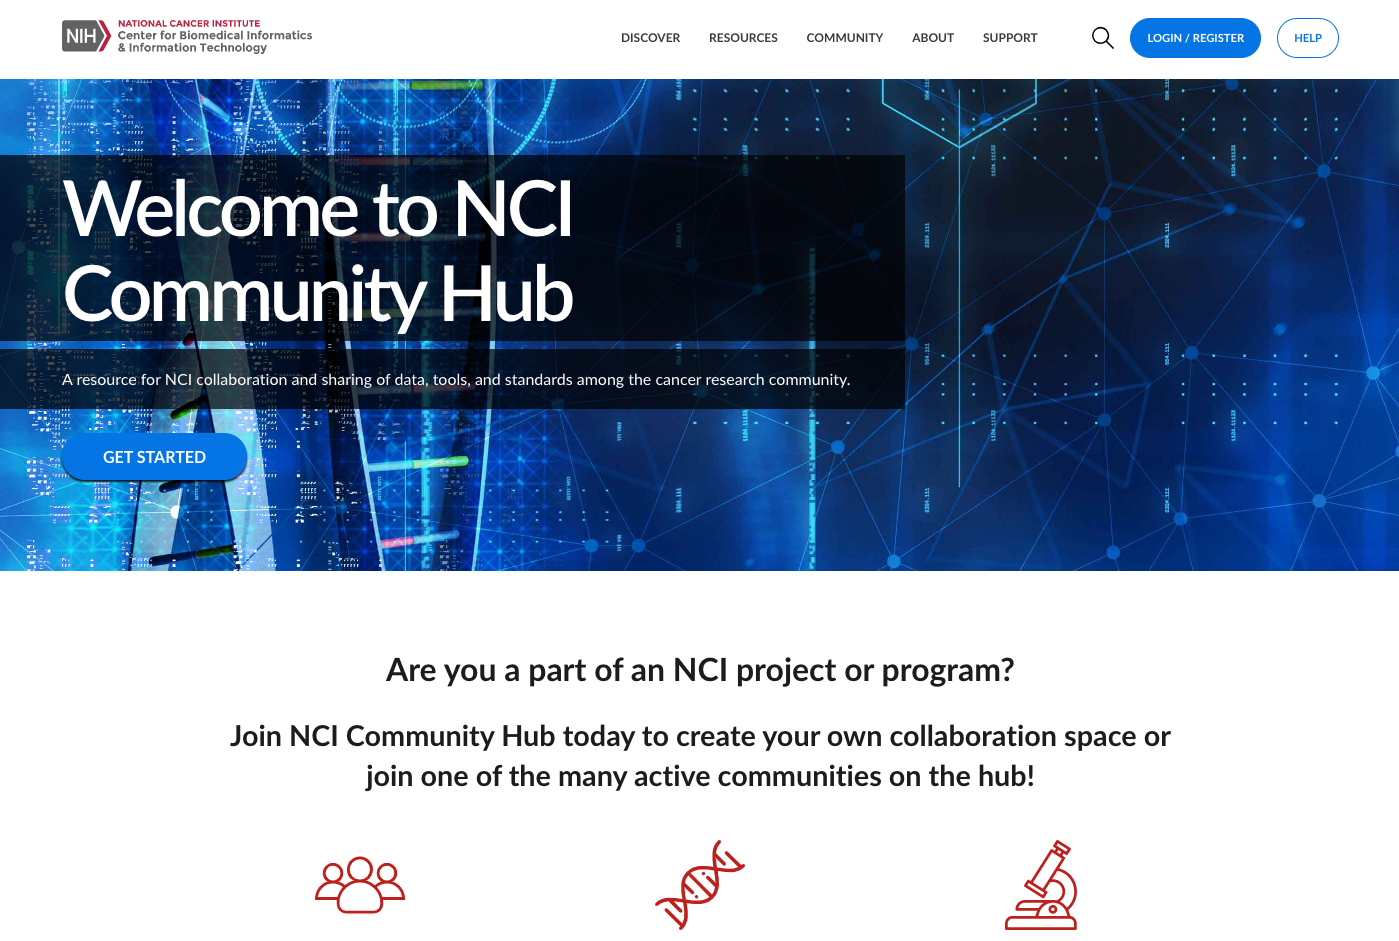 NCI Community Hub